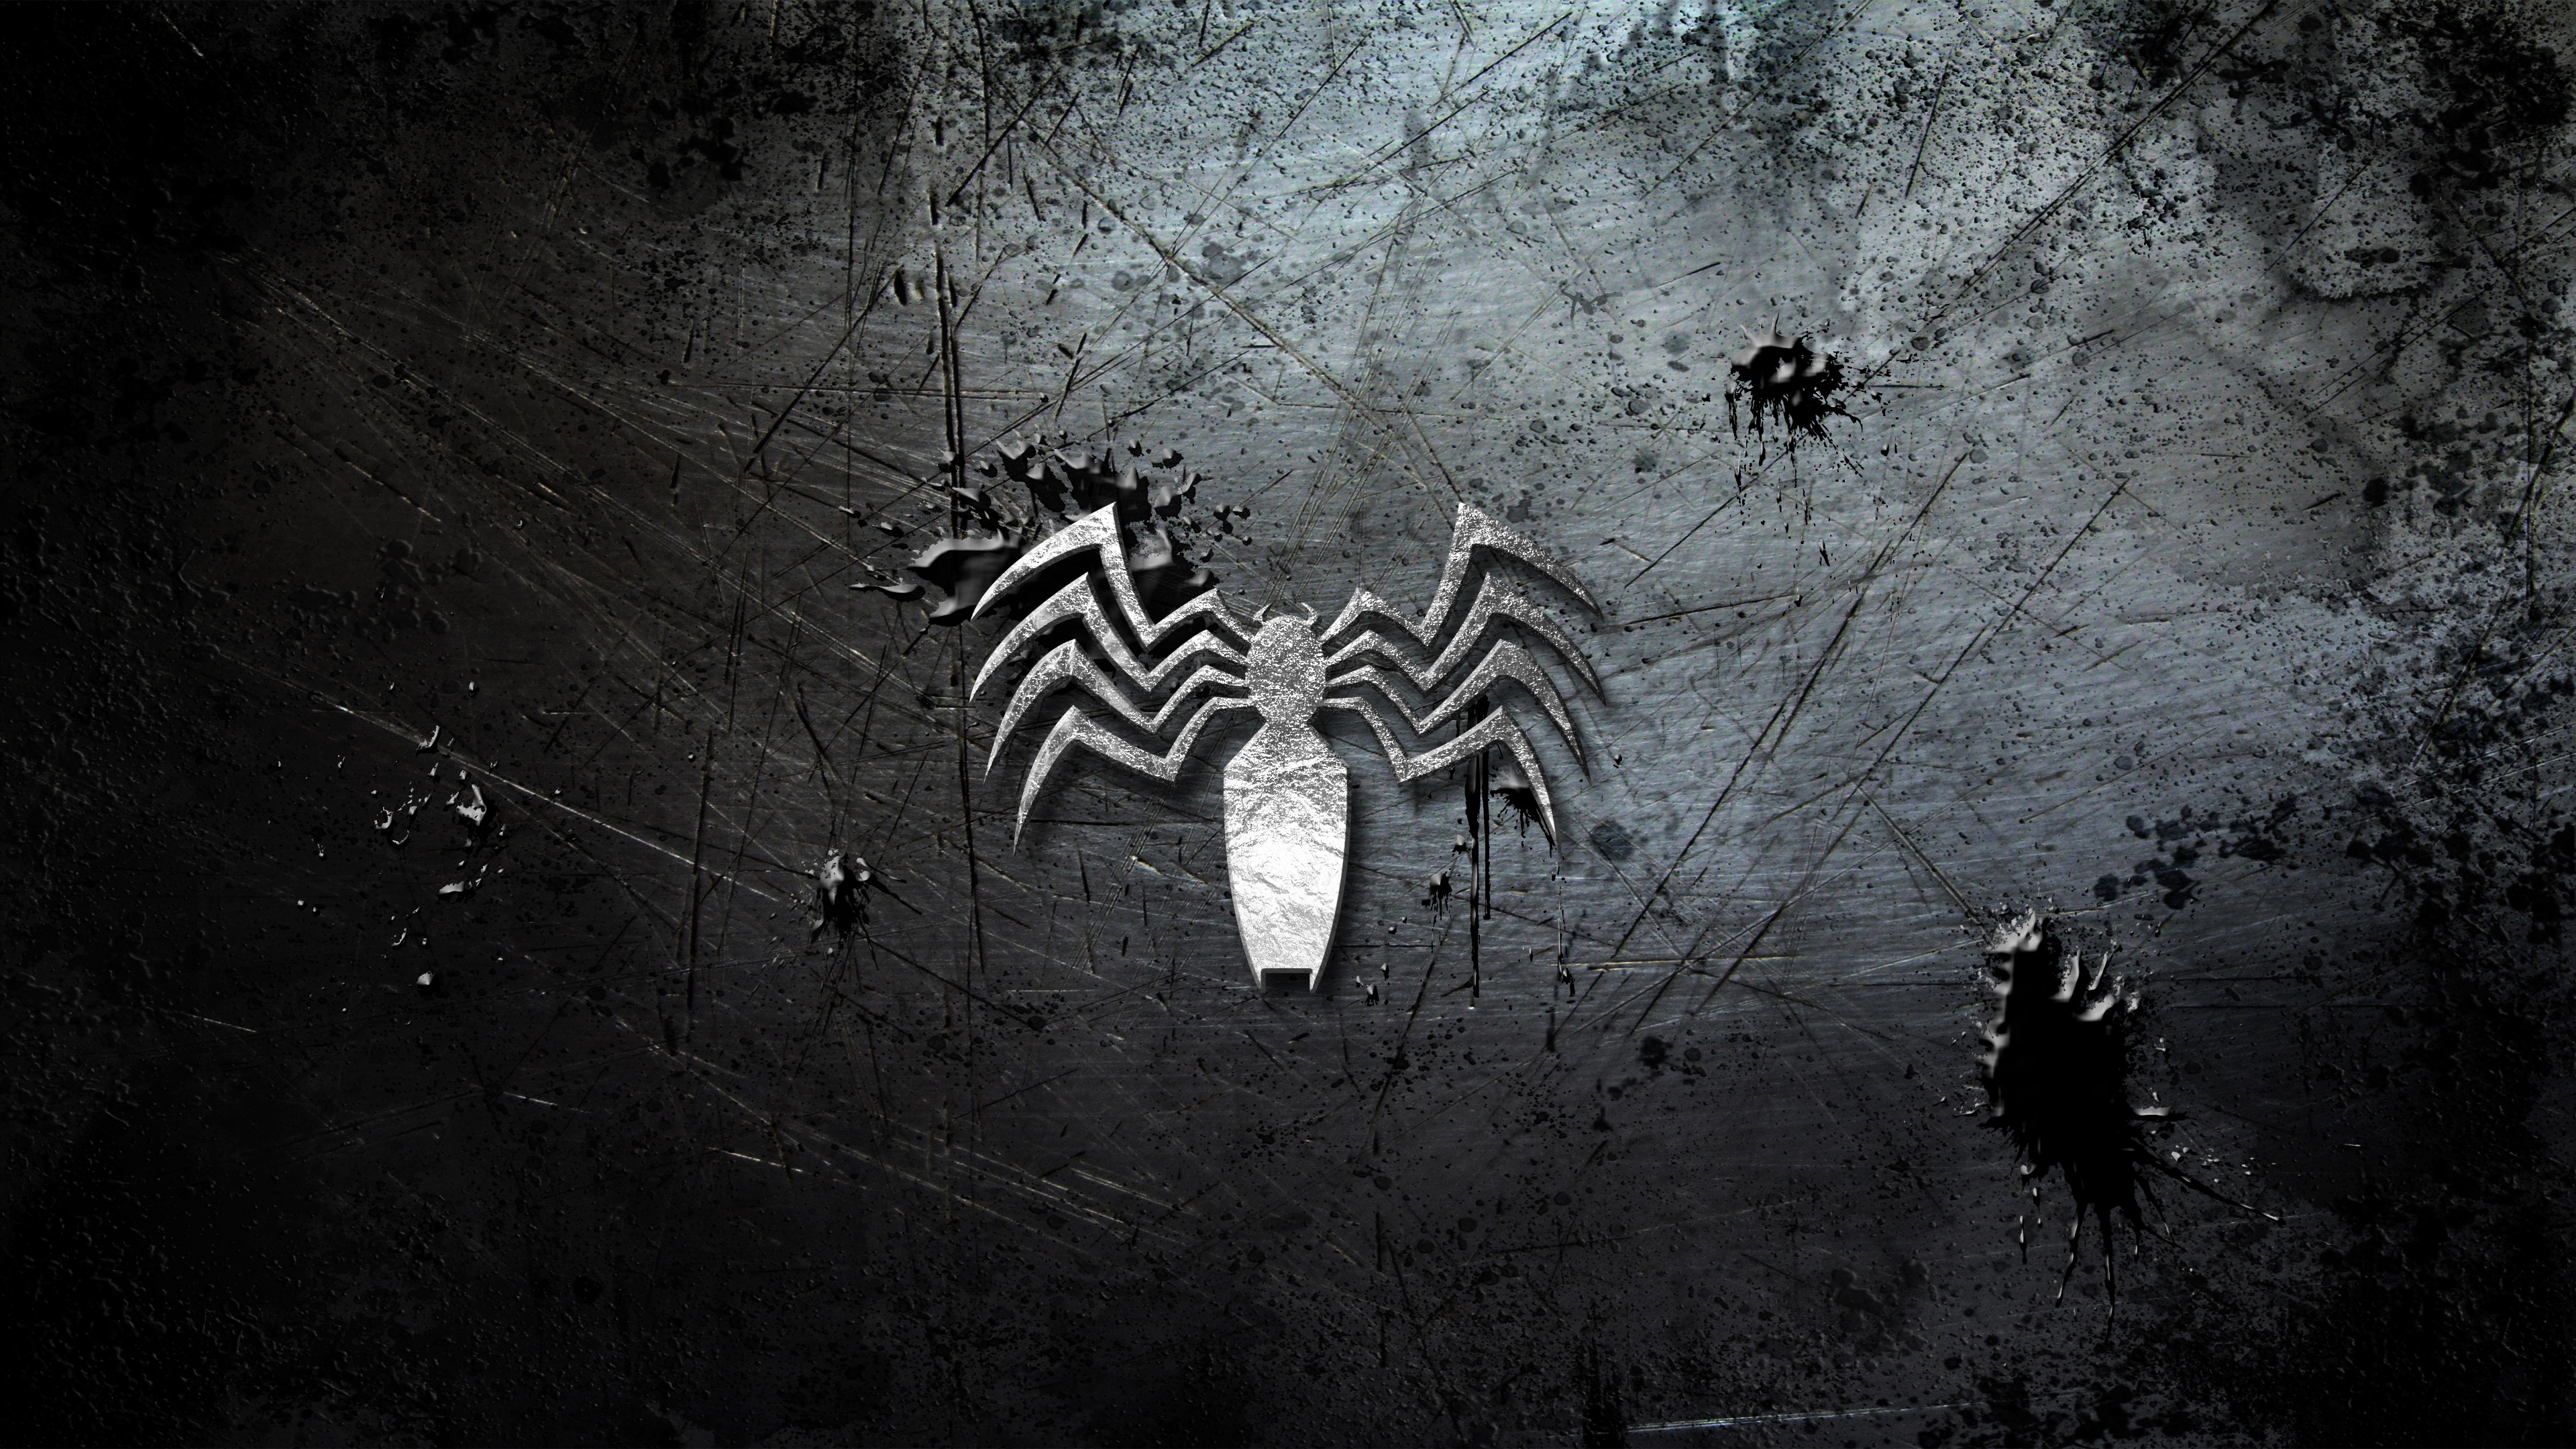 Venom 4k Ultra HD Wallpaper Background Image